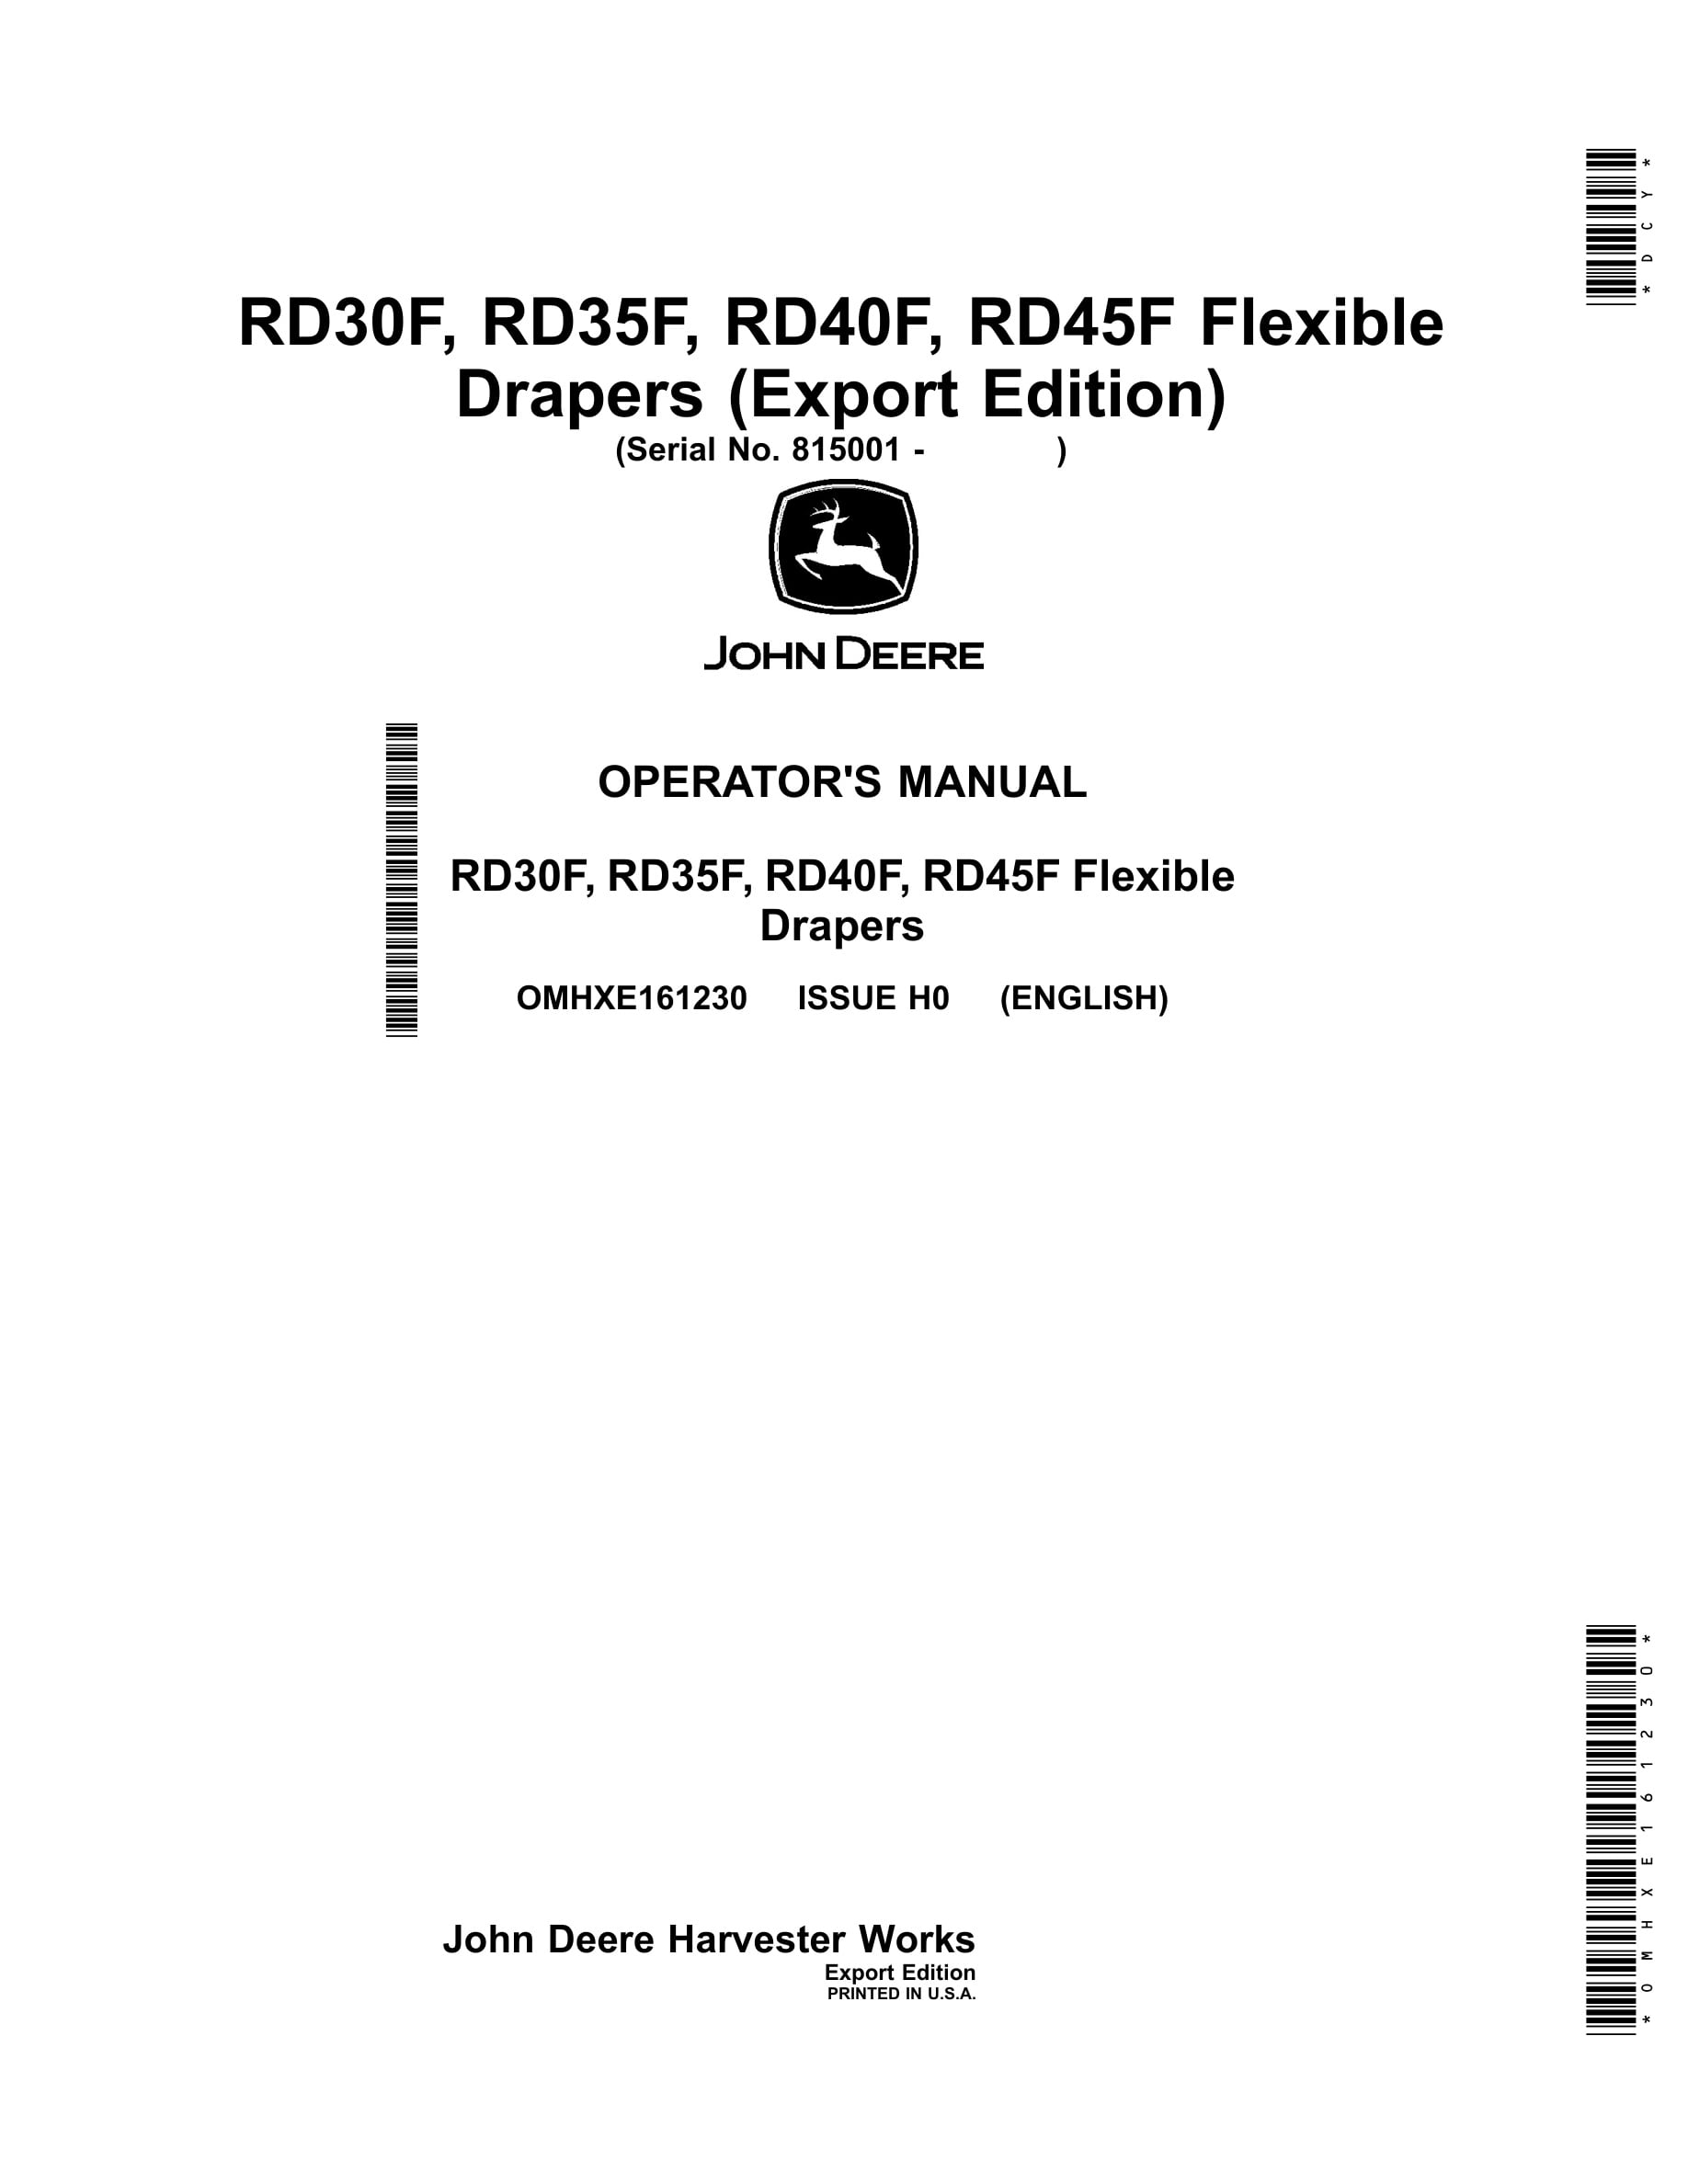 John Deere RD30F, RD35F, RD40F, RD45F Flexible Drapers Operator Manual OMHXE161230-1